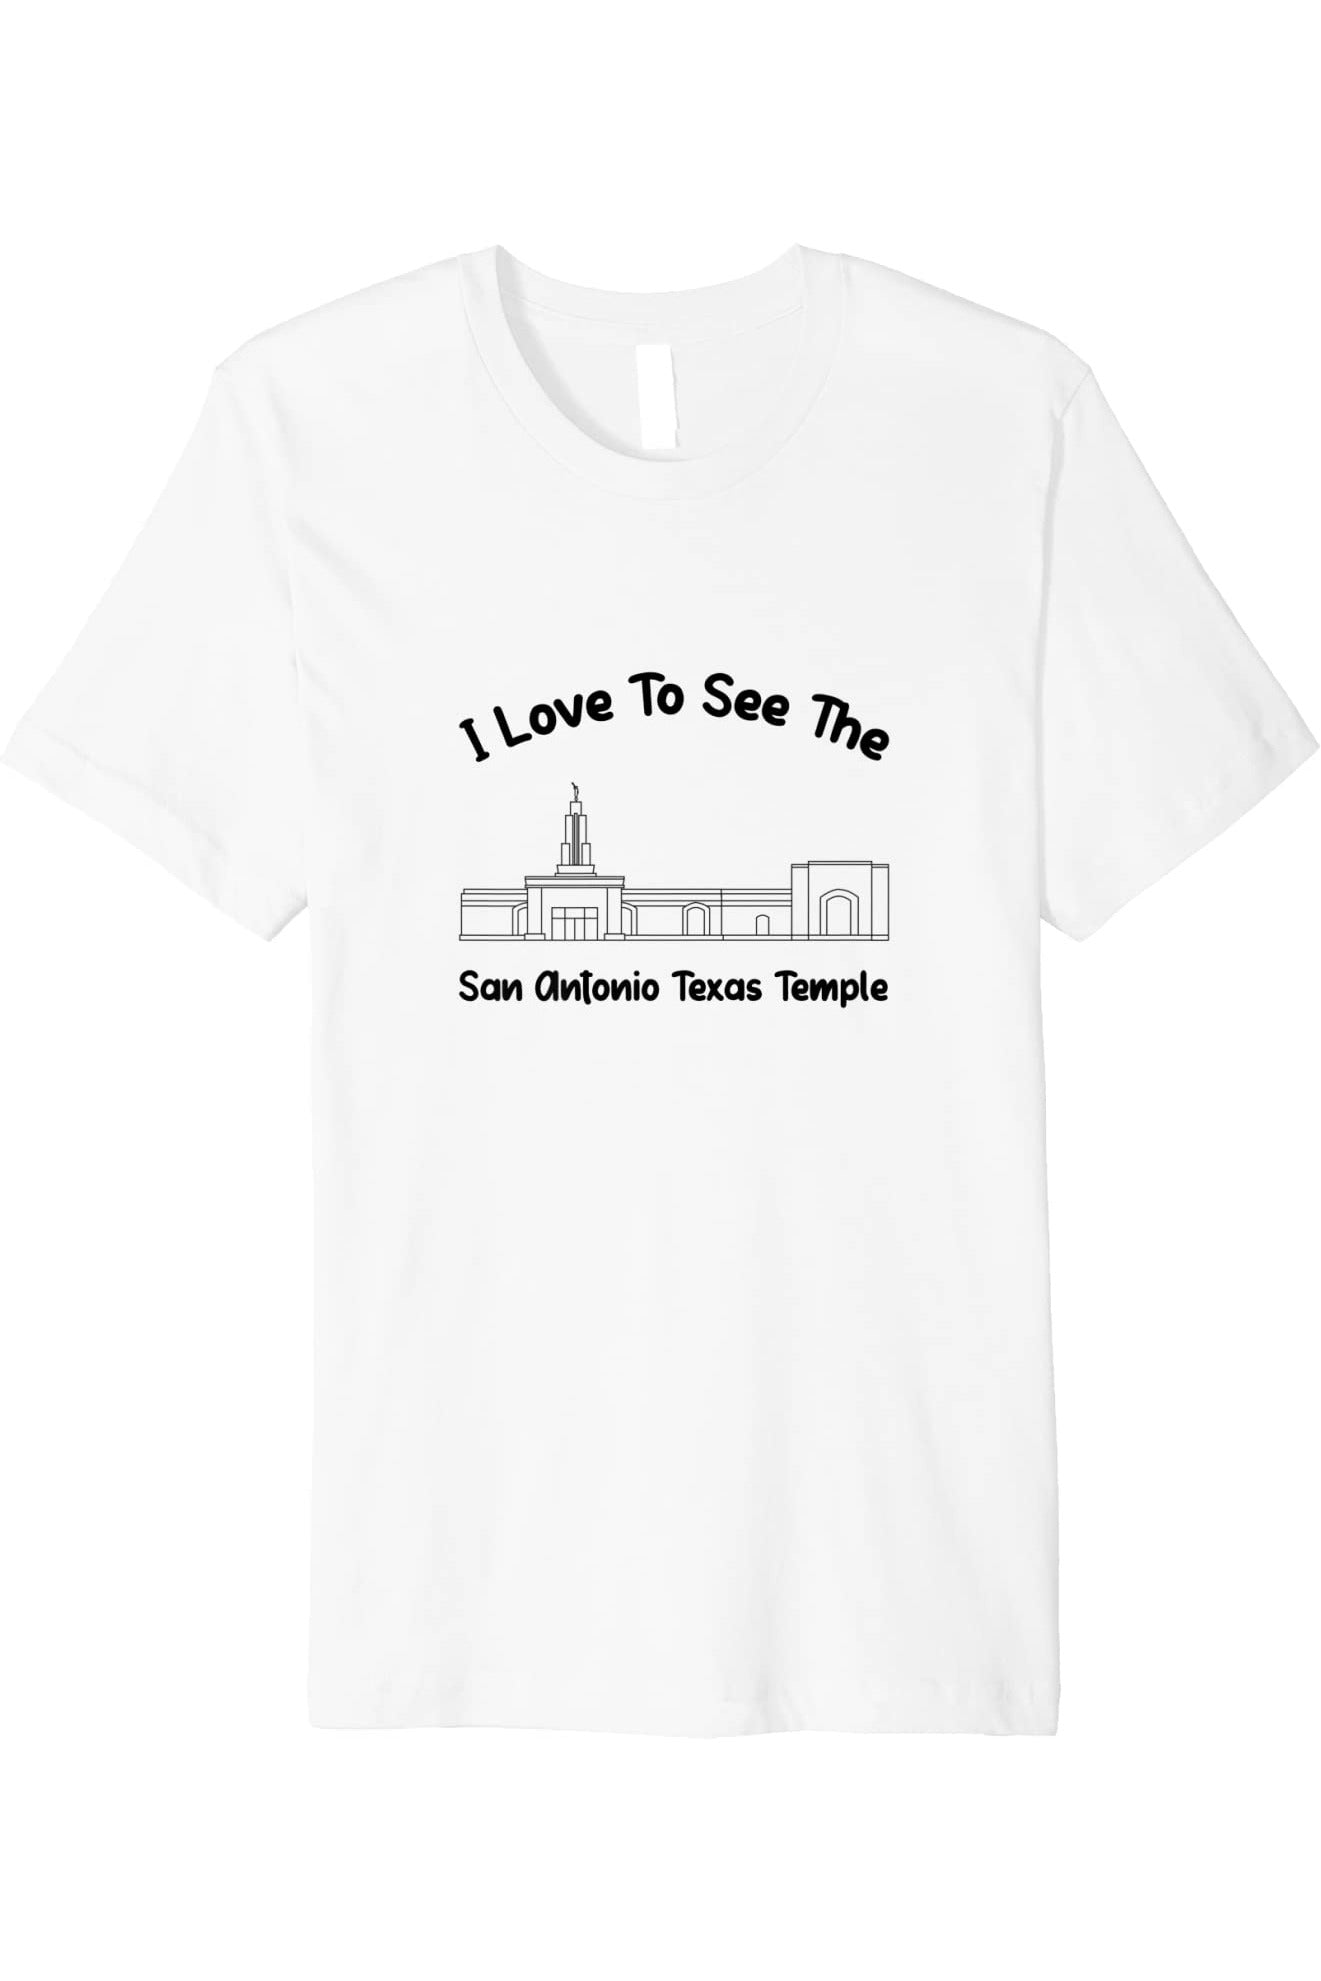 San Antonio Texas Temple T-Shirt - Premium - Primary Style (English) US